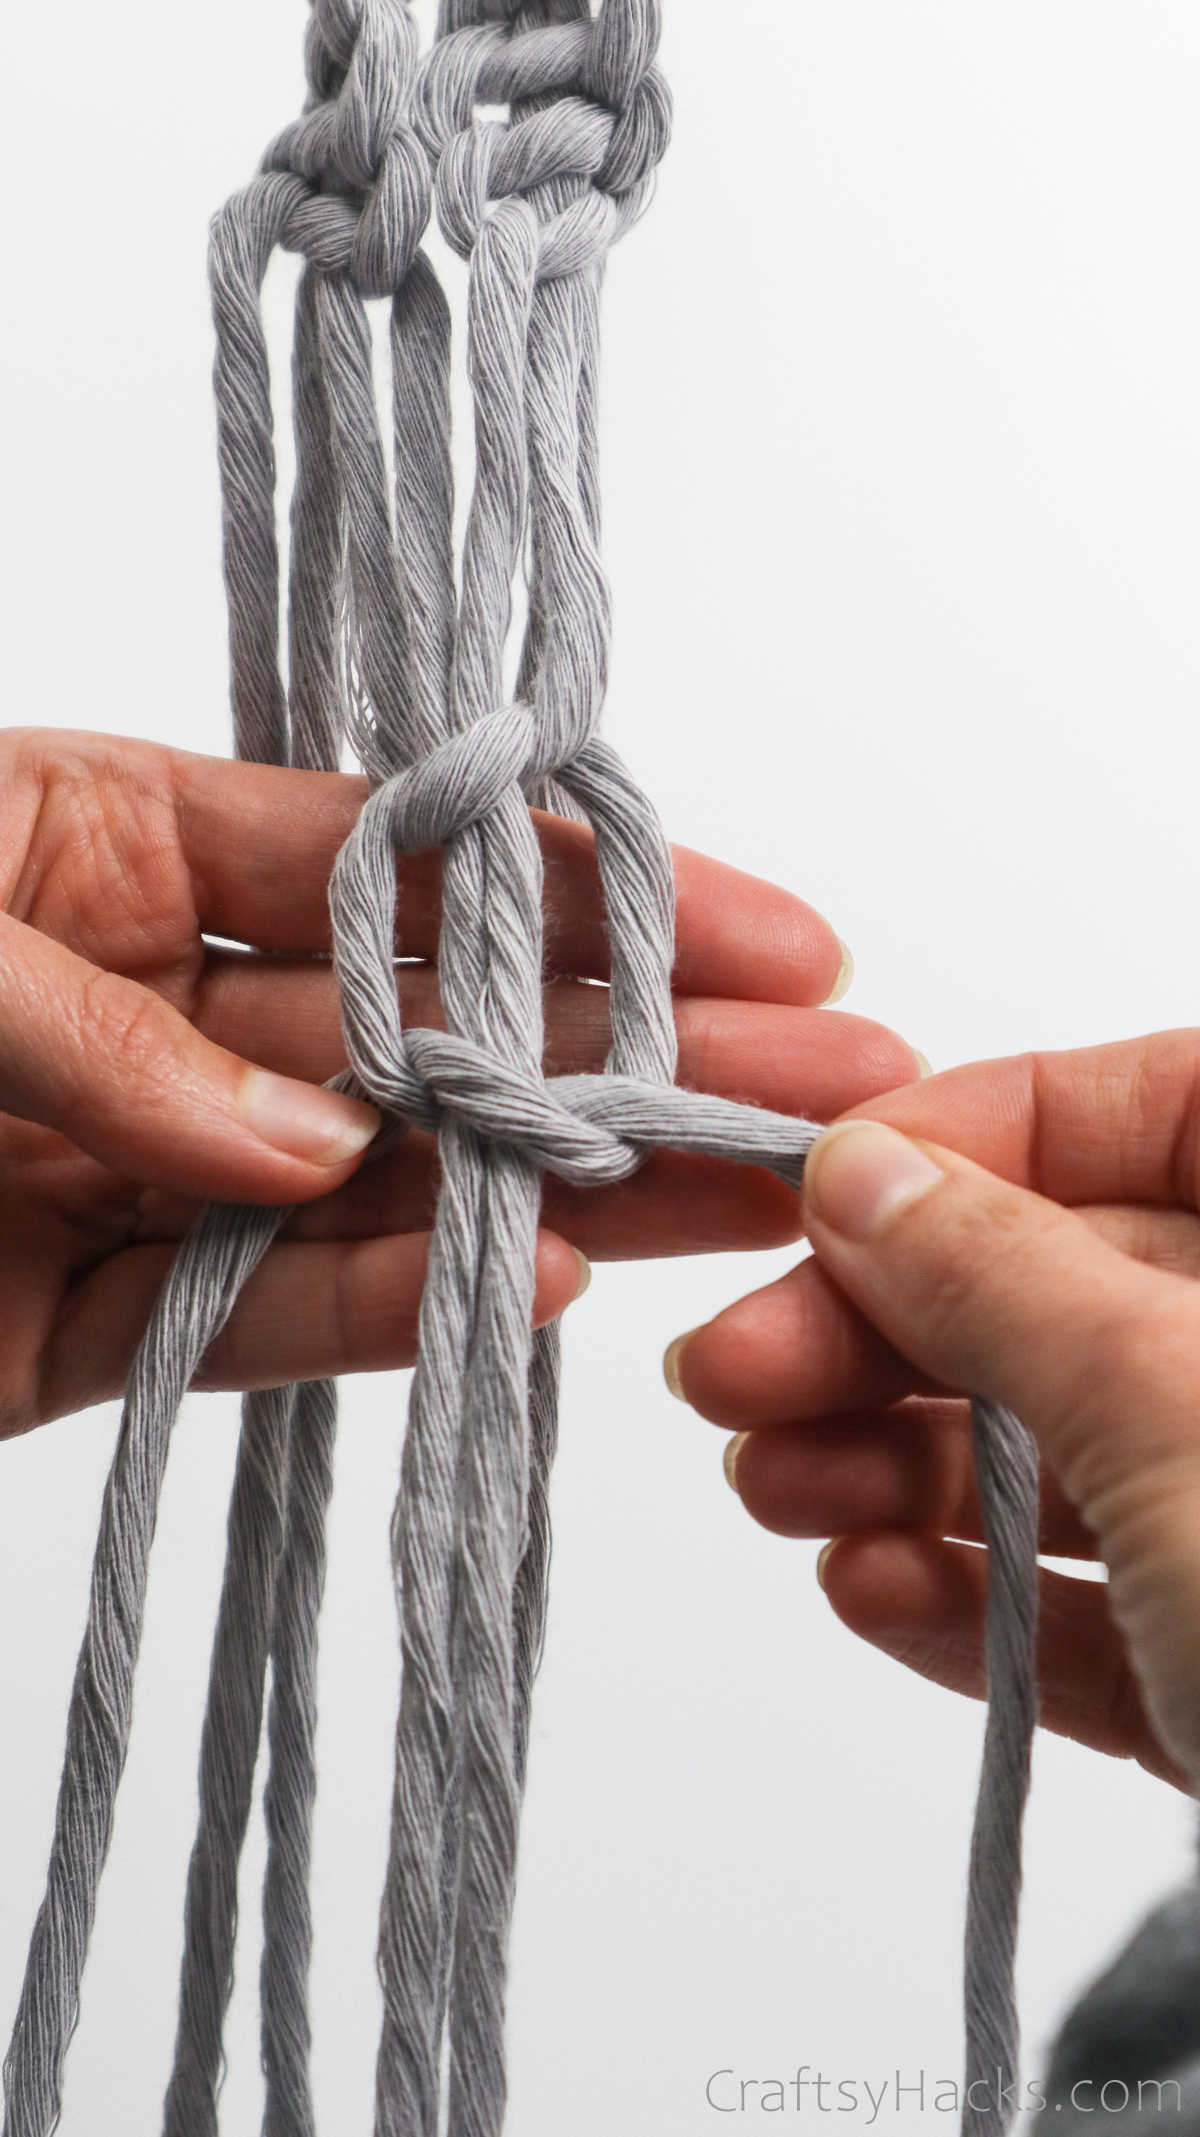 tying knot in string